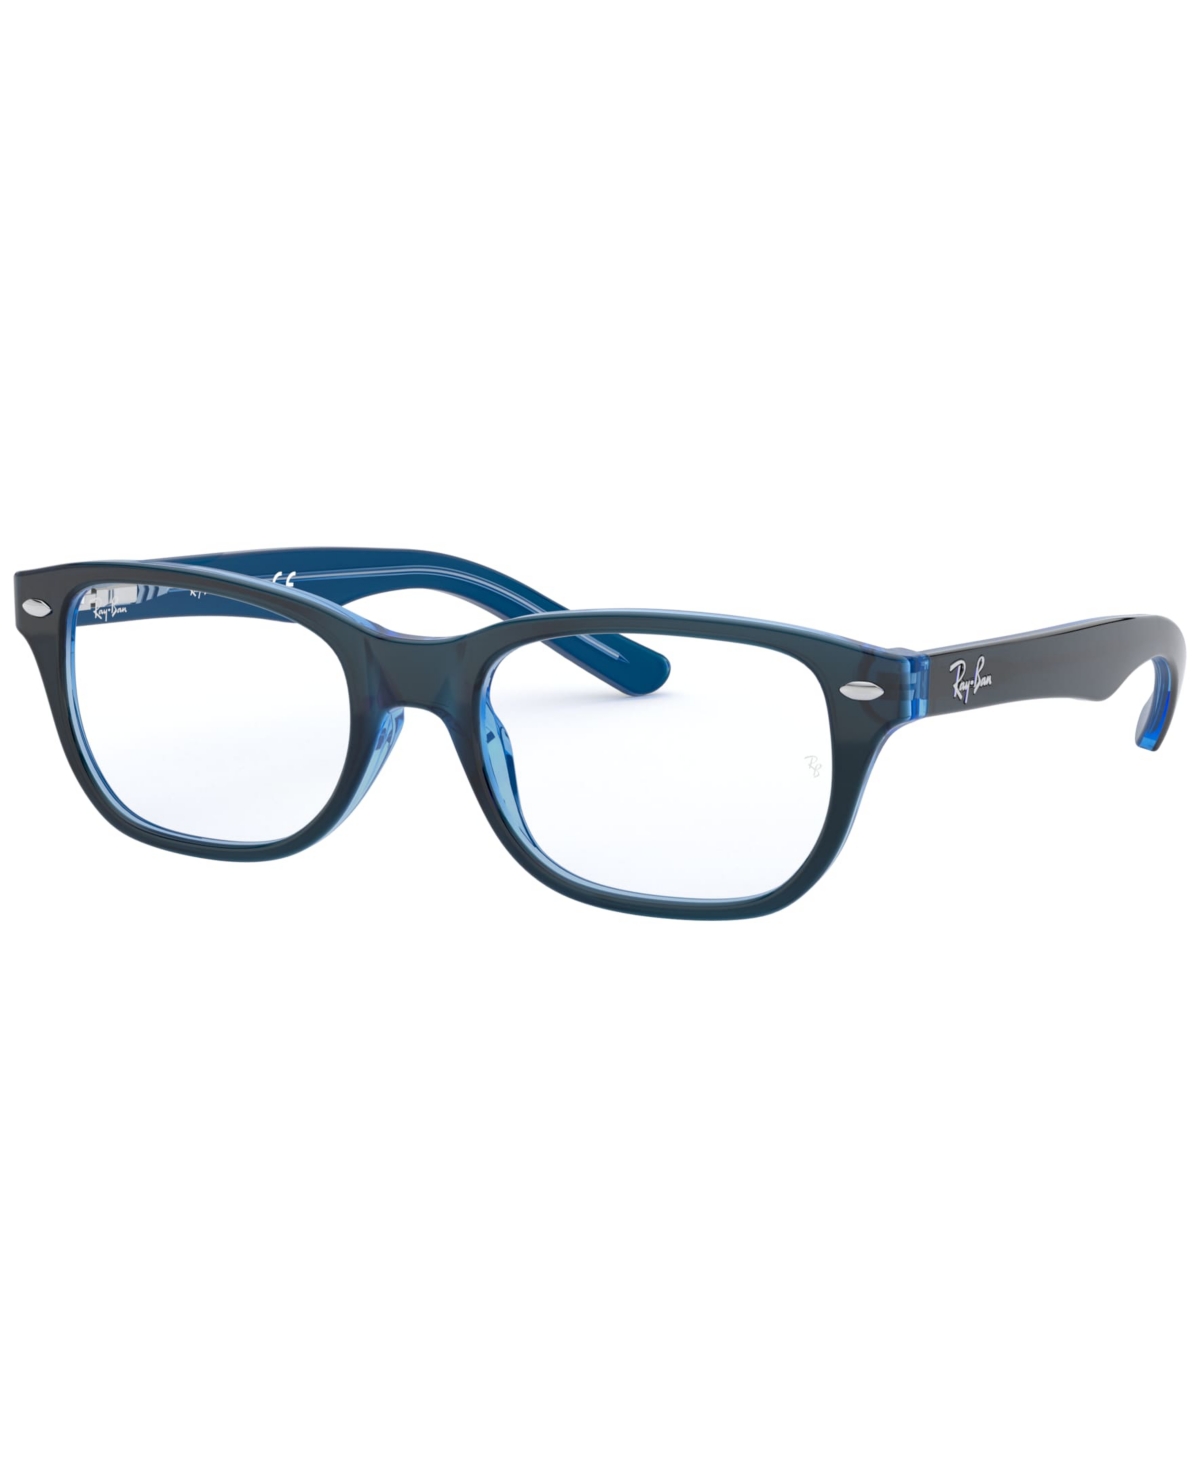 RY1555 Child Square Eyeglasses - Blue